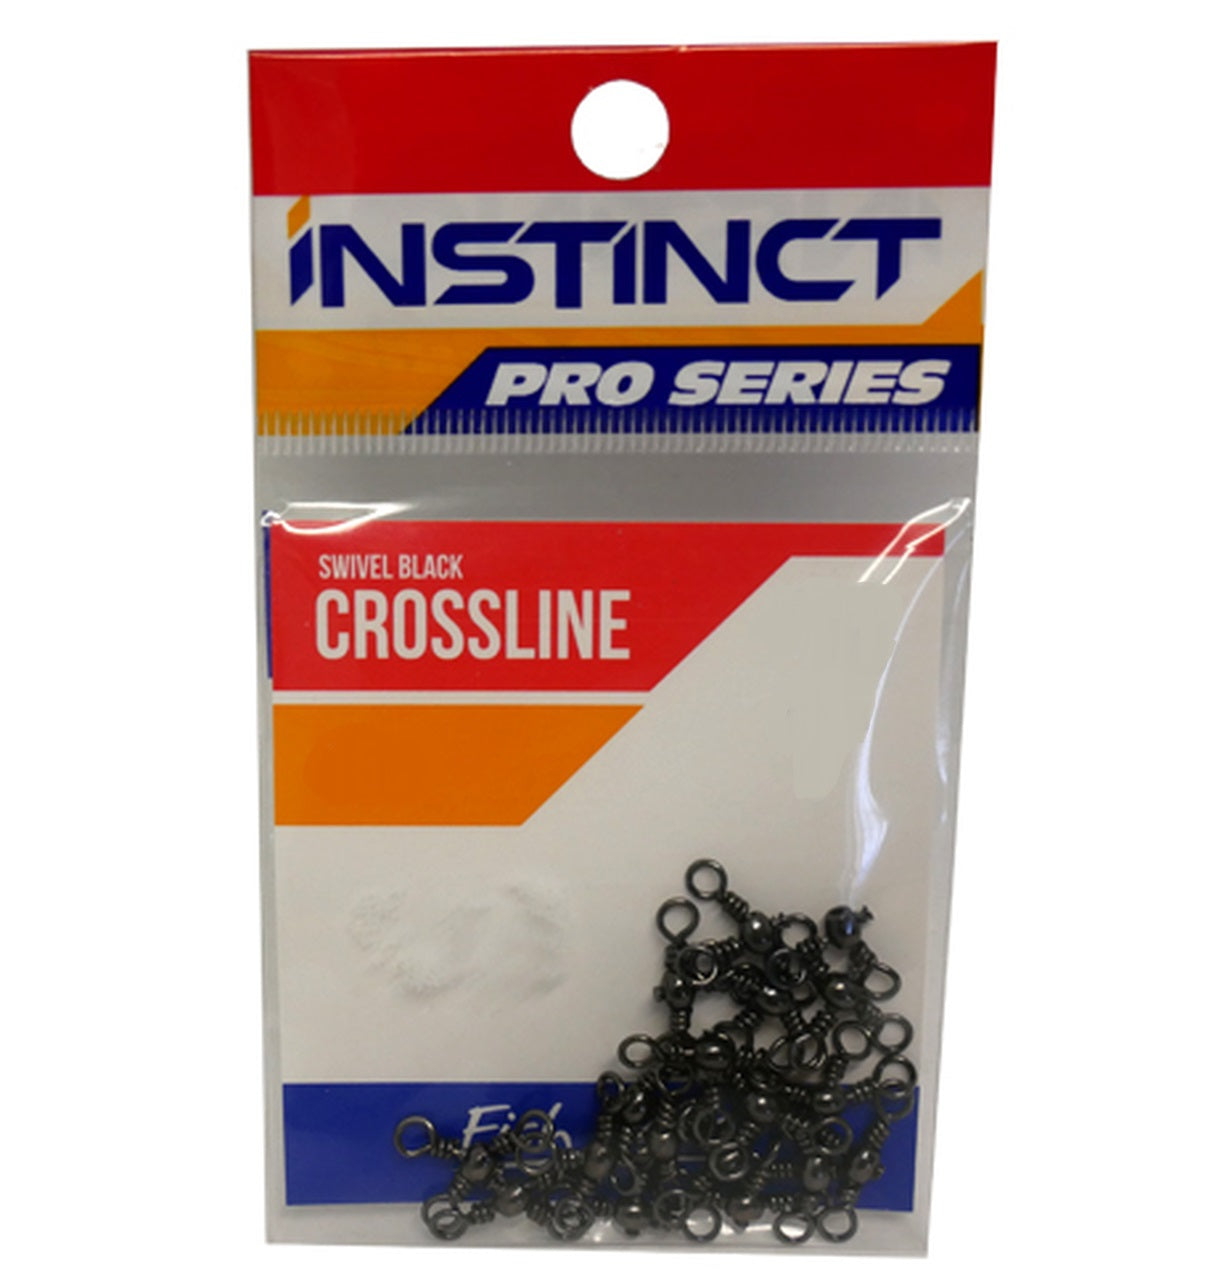 Instinct Pro Series IN200 Black Crossline Swivel